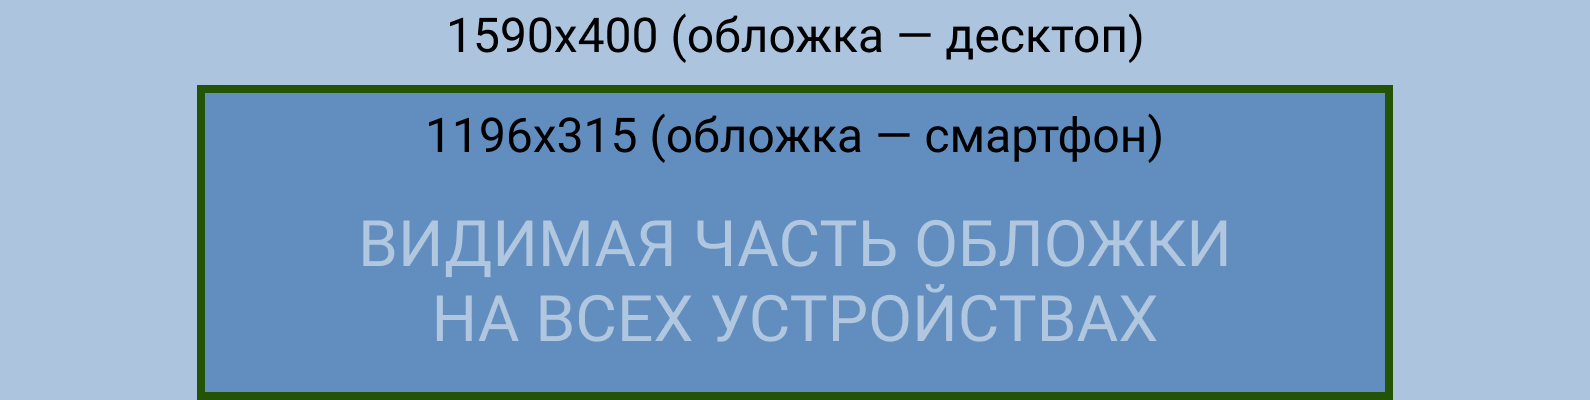 Размер обложки Вконтакте, шаблон online-media